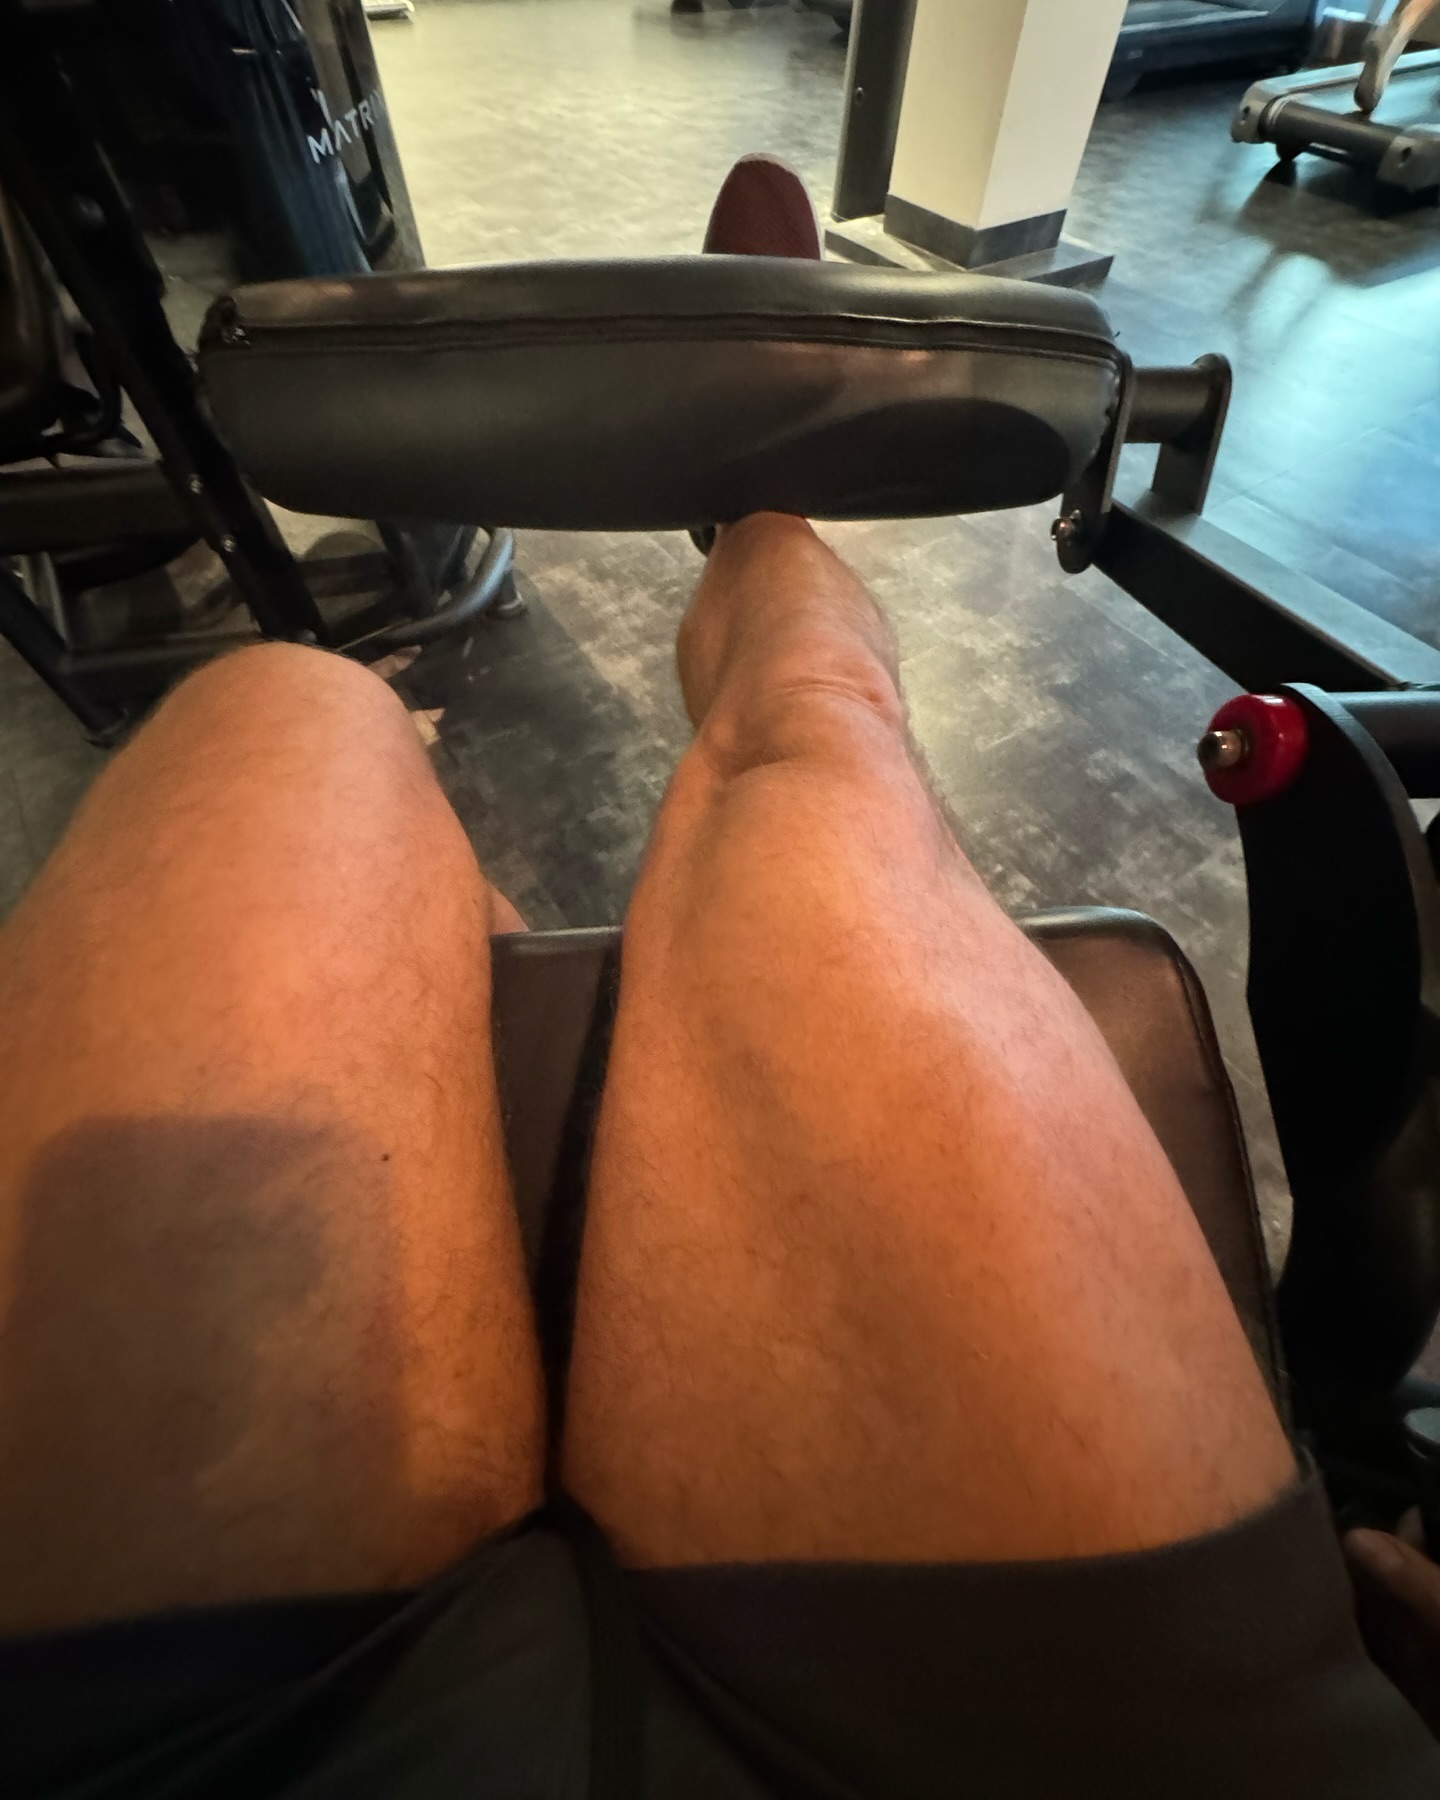 Project „chicken legs“ @sloppy_joeyy 😉😄🥰

#gym #workoutmotivation #veganfit #gayfit